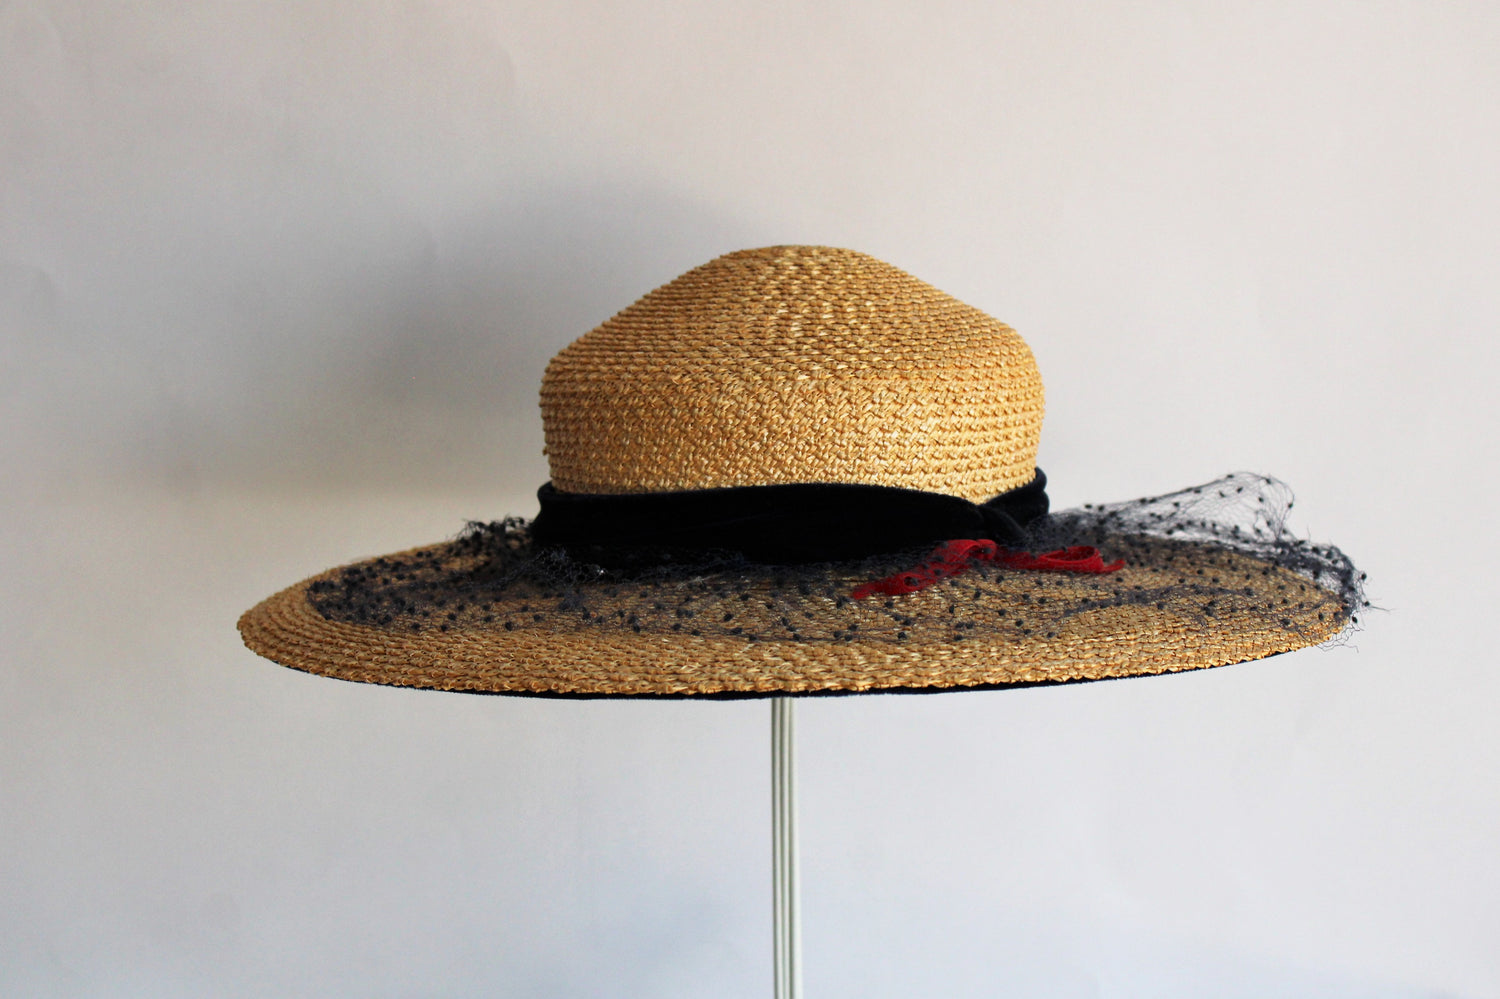 Vintage 1940s Straw Hat with Velvet Ribbon Trim and Birdcage Veil